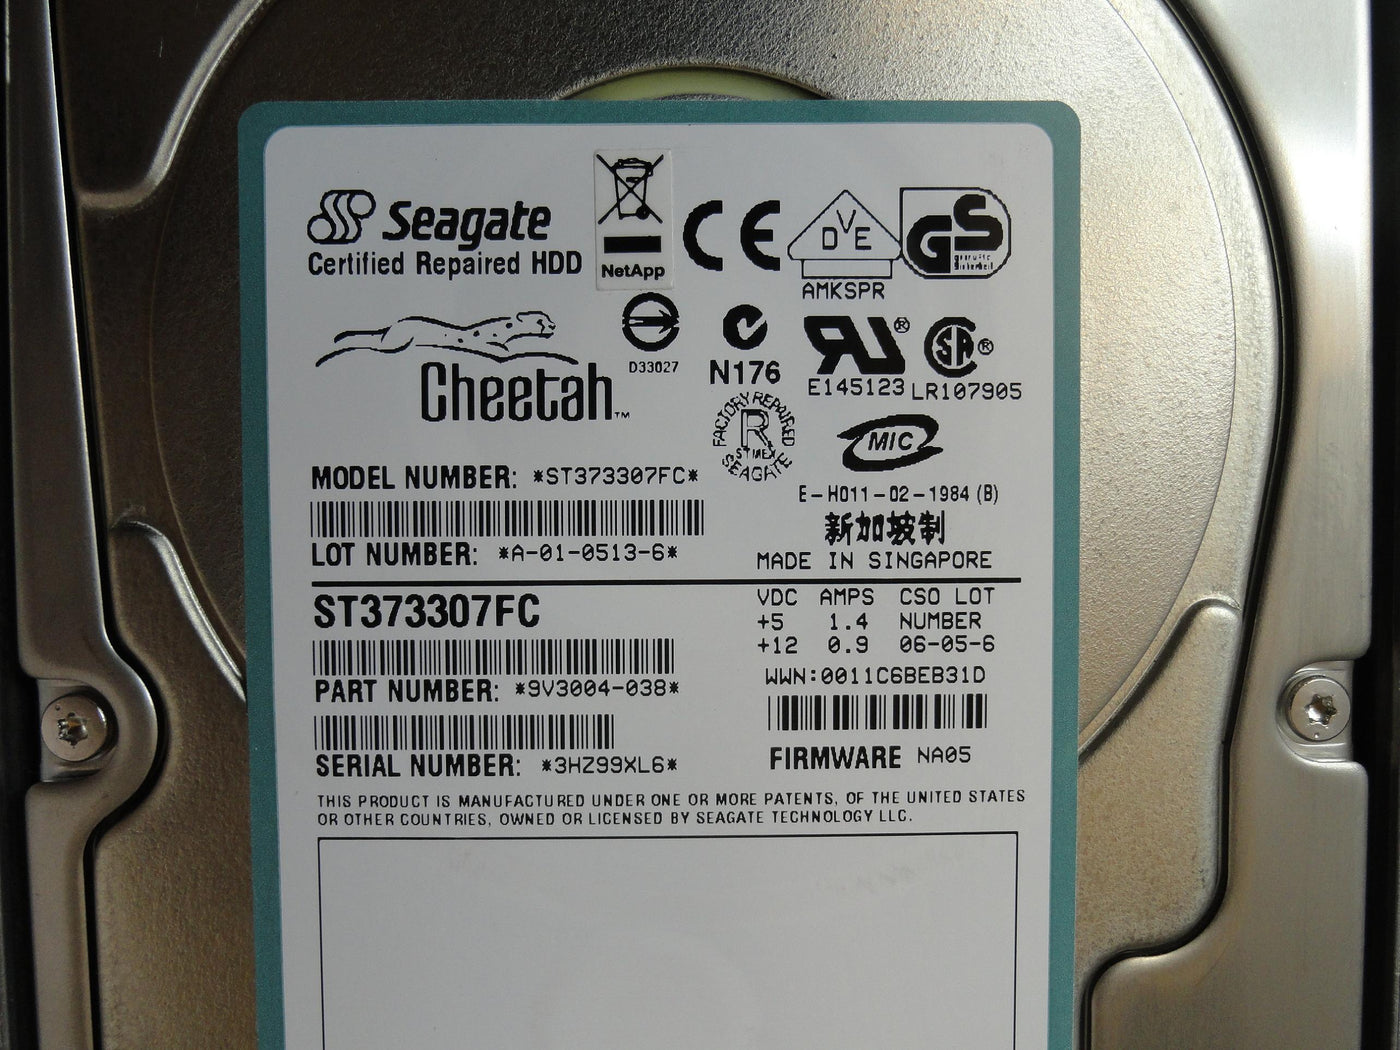 PR21202_9V3004-038_Seagate NetApp 73Gb Fibre Chnl 10Krpm 3.5in HDD - Image3